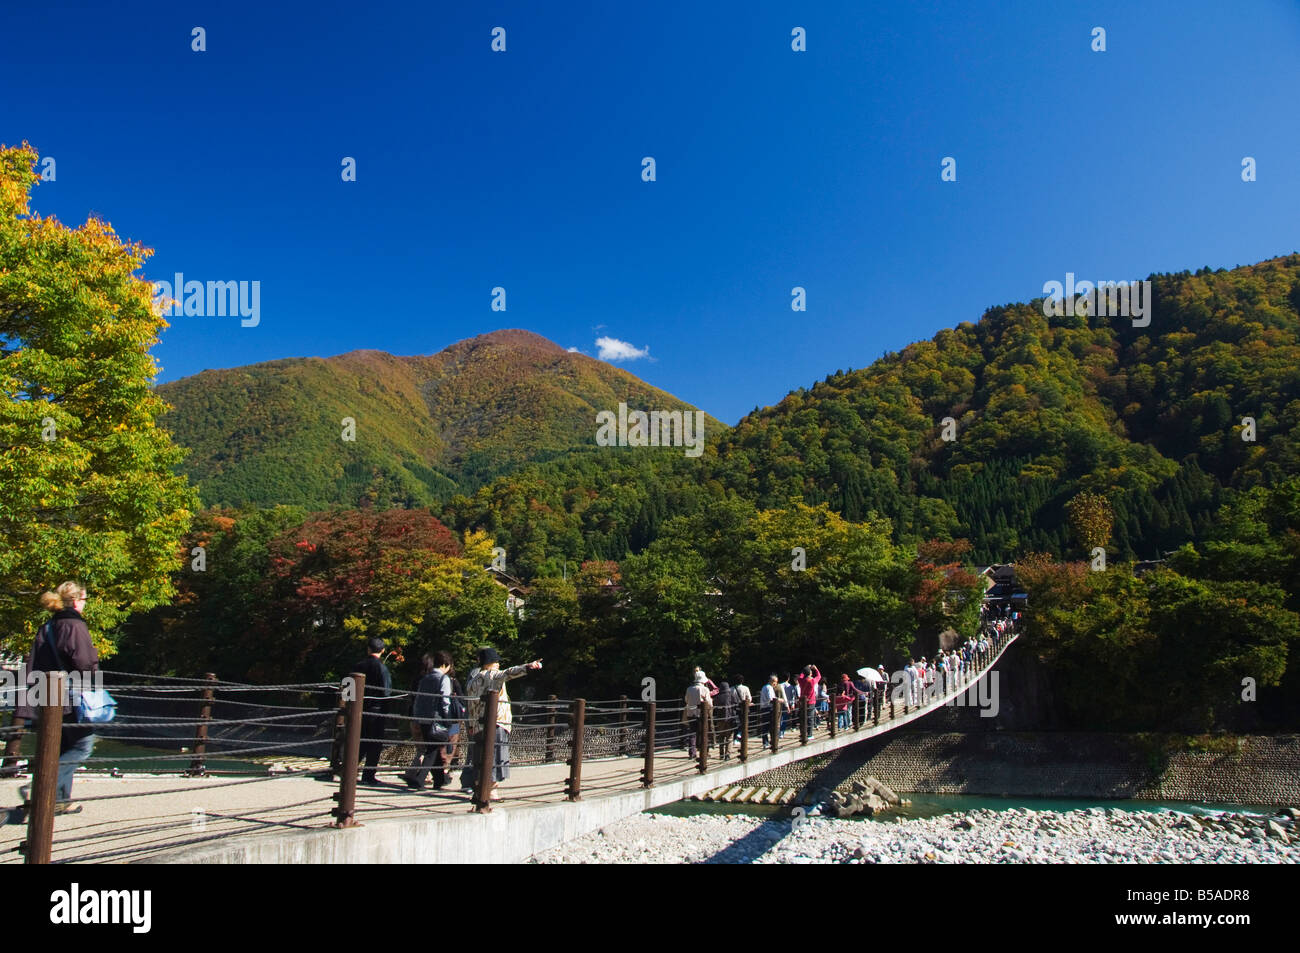 Hängebrücke mit Touristen am Standort des Gassho Zukkuri, Shirakawago Bezirk, Ogi Stadt, Präfektur Gifu, Insel Honshu, Japan Stockfoto